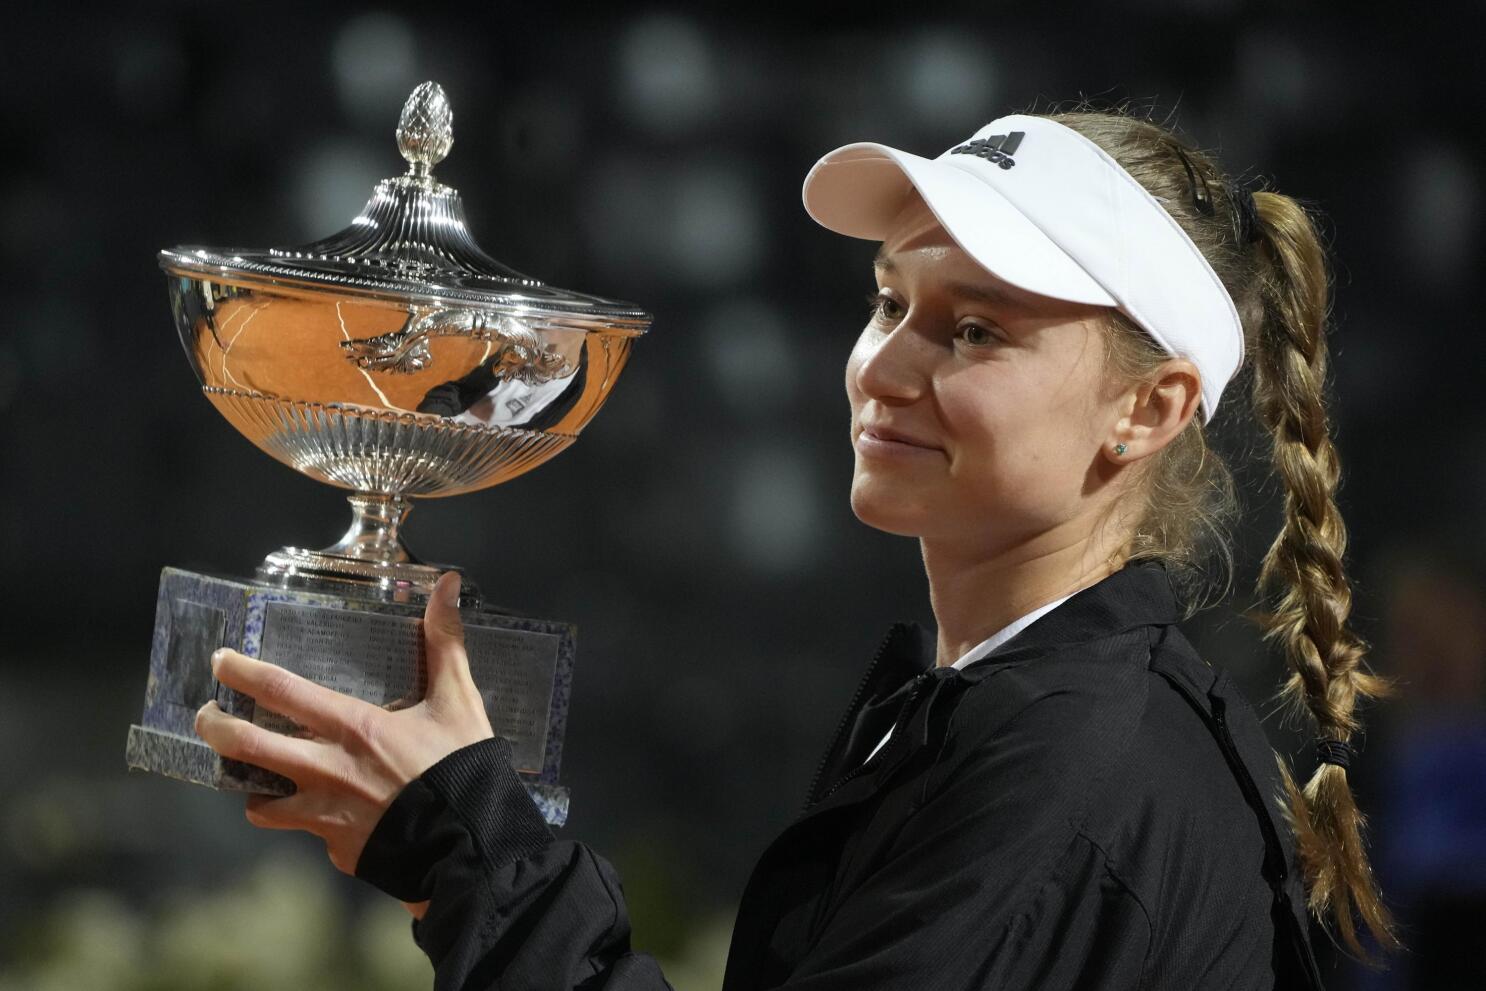 Italian Open: Kalinina wins epic quarter-final - Tennis Majors